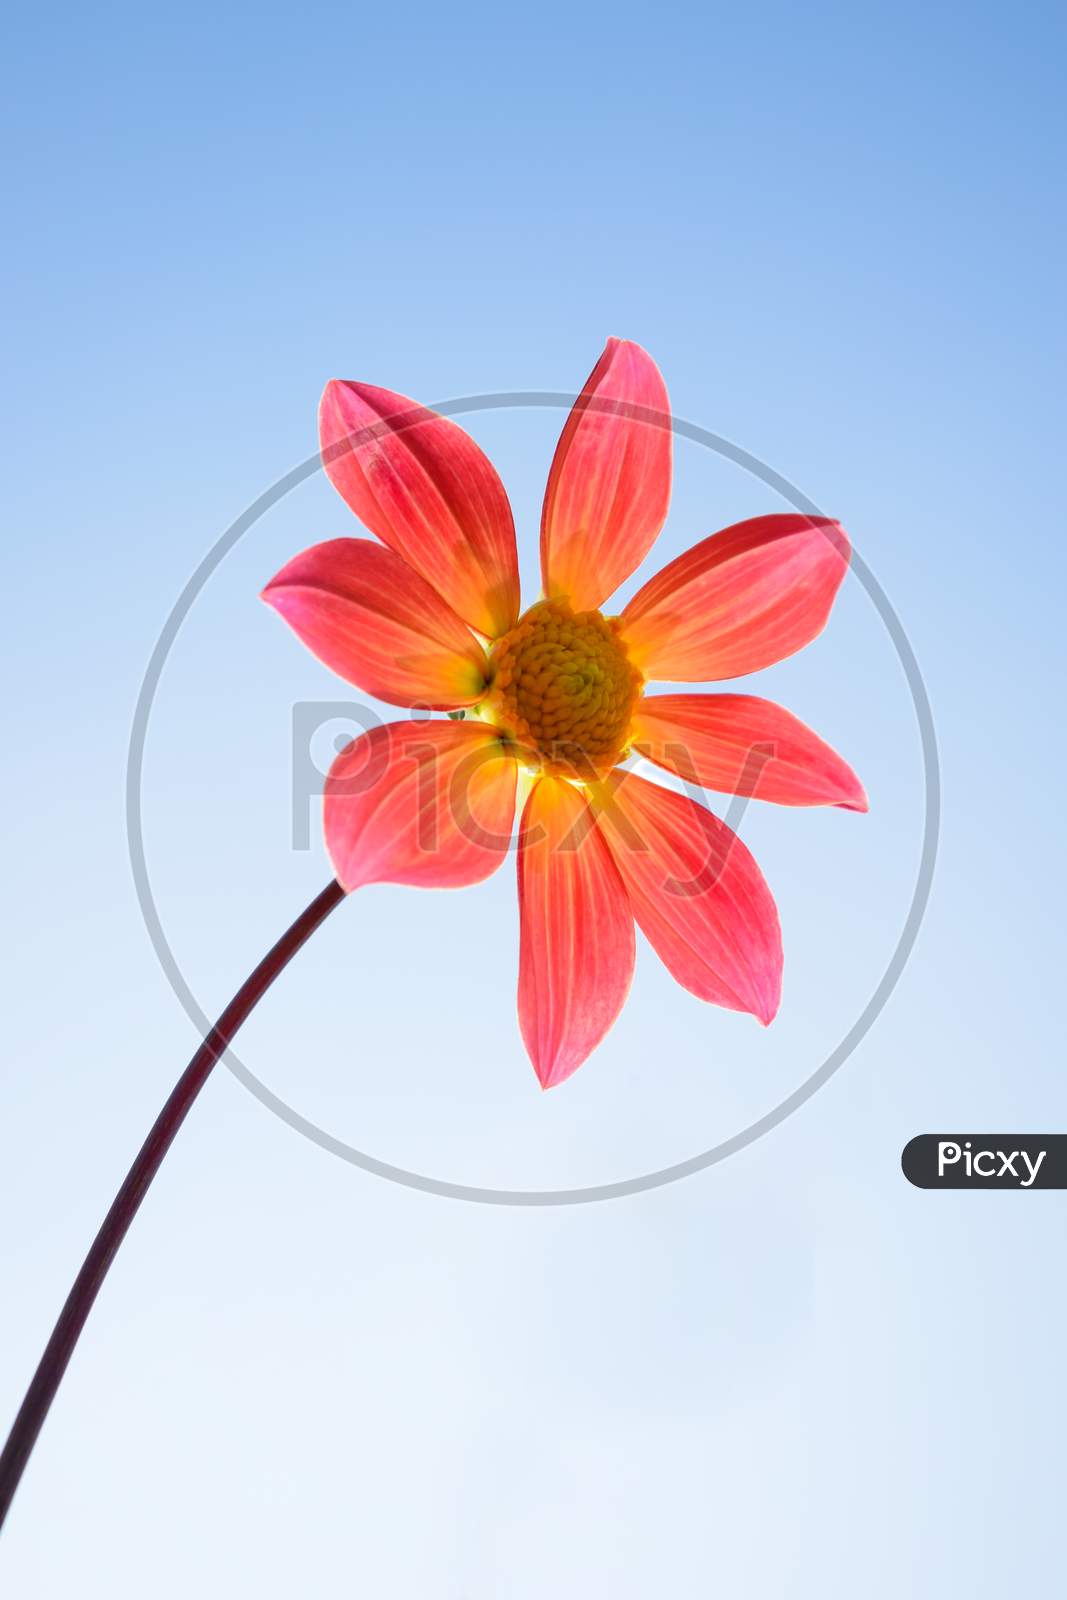 Red single petal dahlia closeup, India